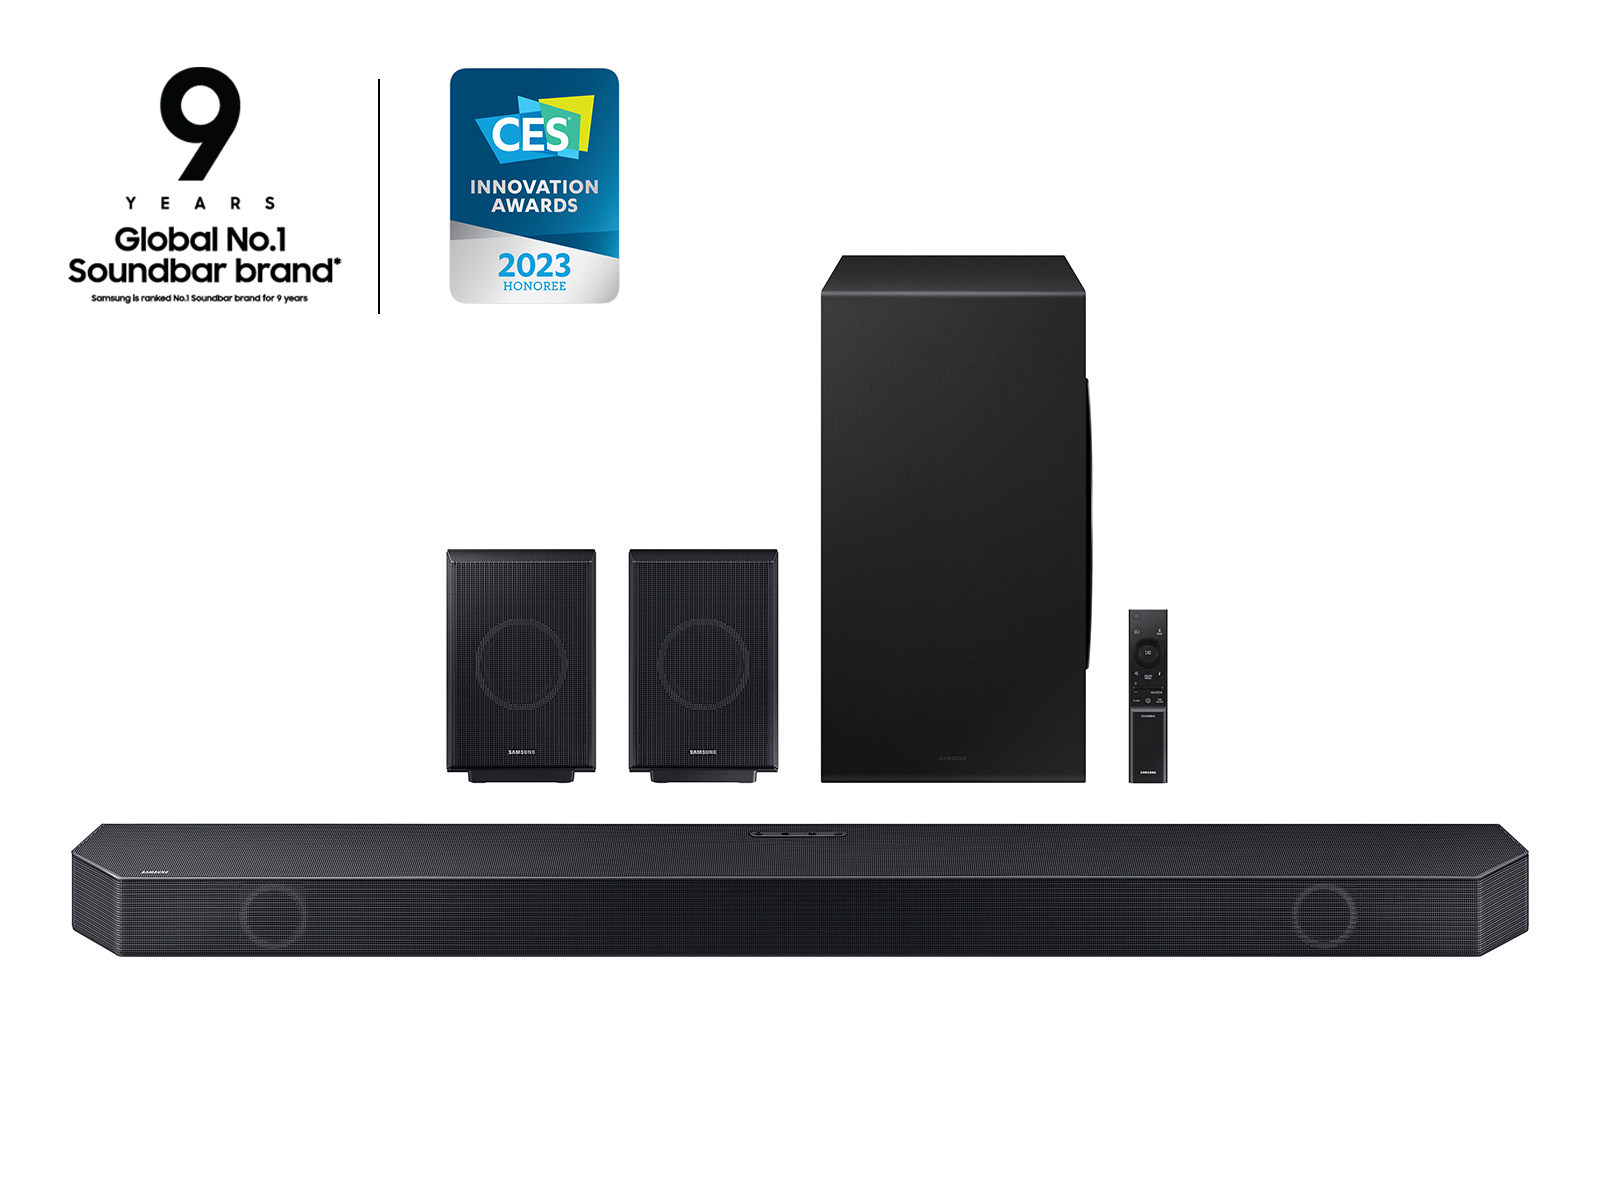 Q-series 11.1.4 ch. Wireless Dolby ATMOS Soundbar Q990C